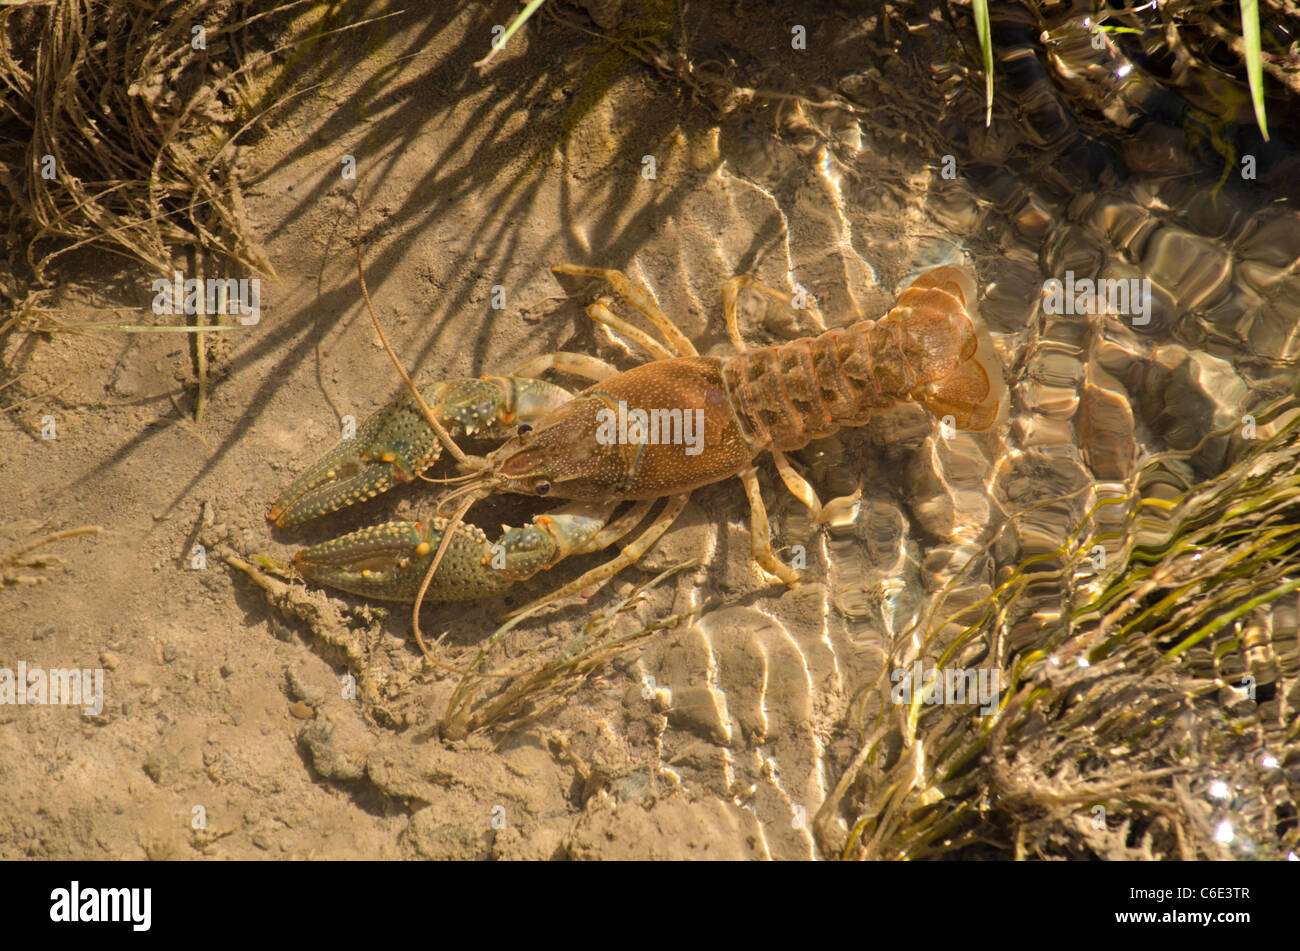 Virile crayfish (Orconectes virilis) in irrigation canal, Ridgway Colorado US. Photo taken in August. Stock Photo